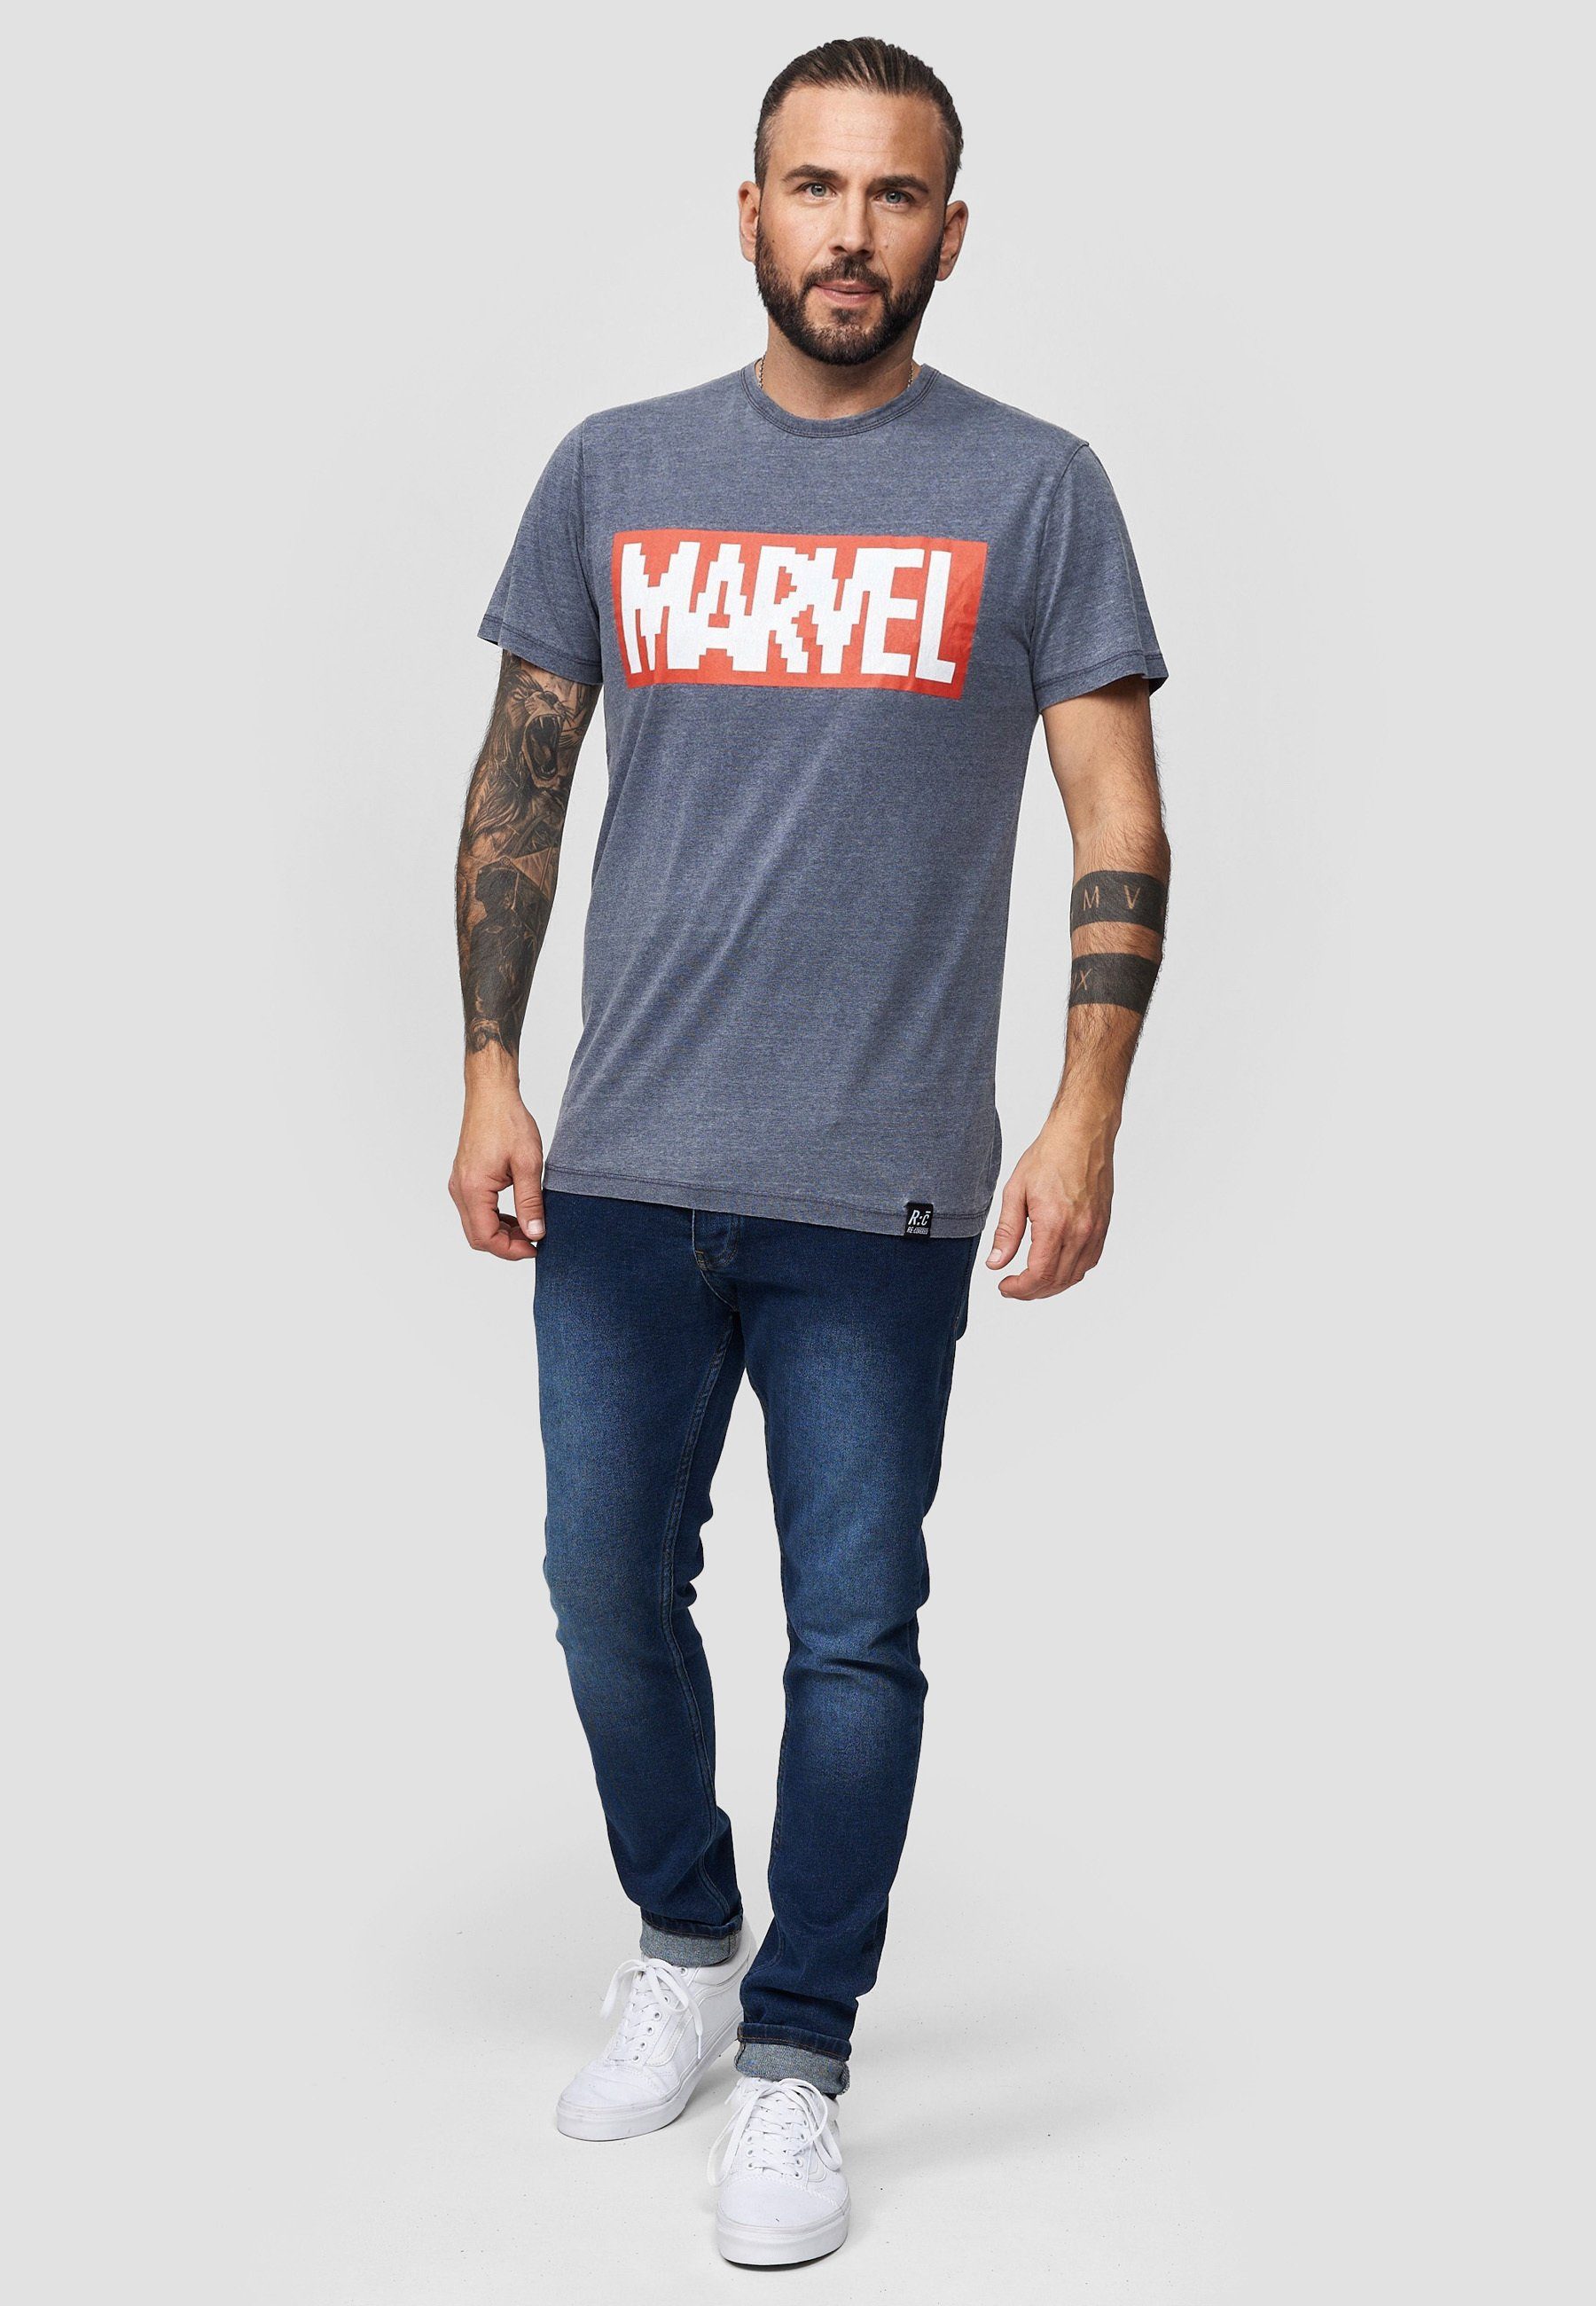 Pixel zertifizierte Recovered Bio-Baumwolle GOTS Logo Marvel T-Shirt